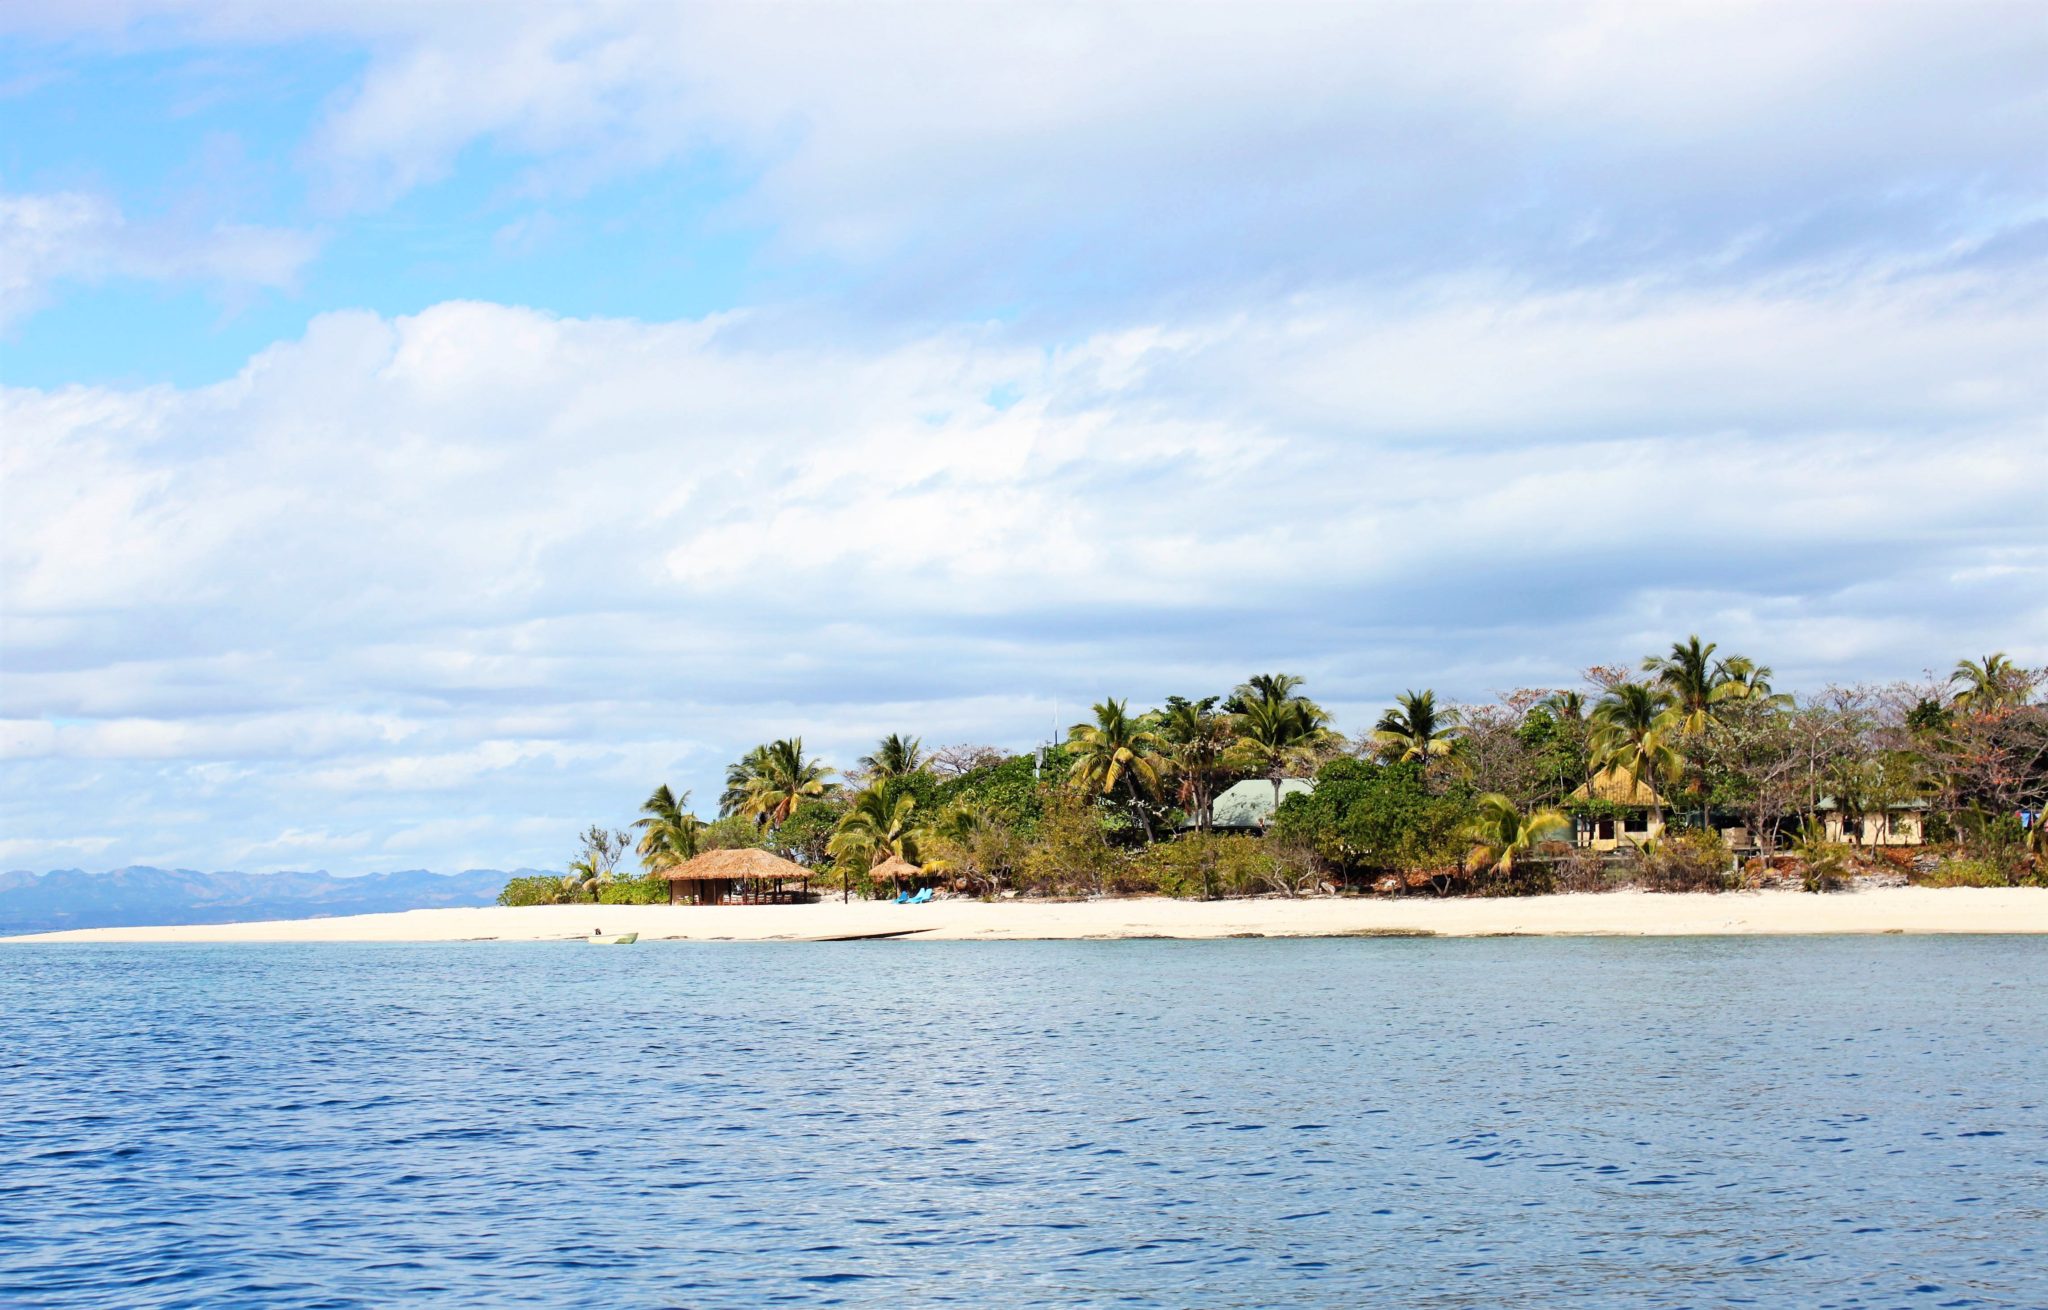 Discover what Island is Fiji's hidden gem | #fiji #navini #simplywander